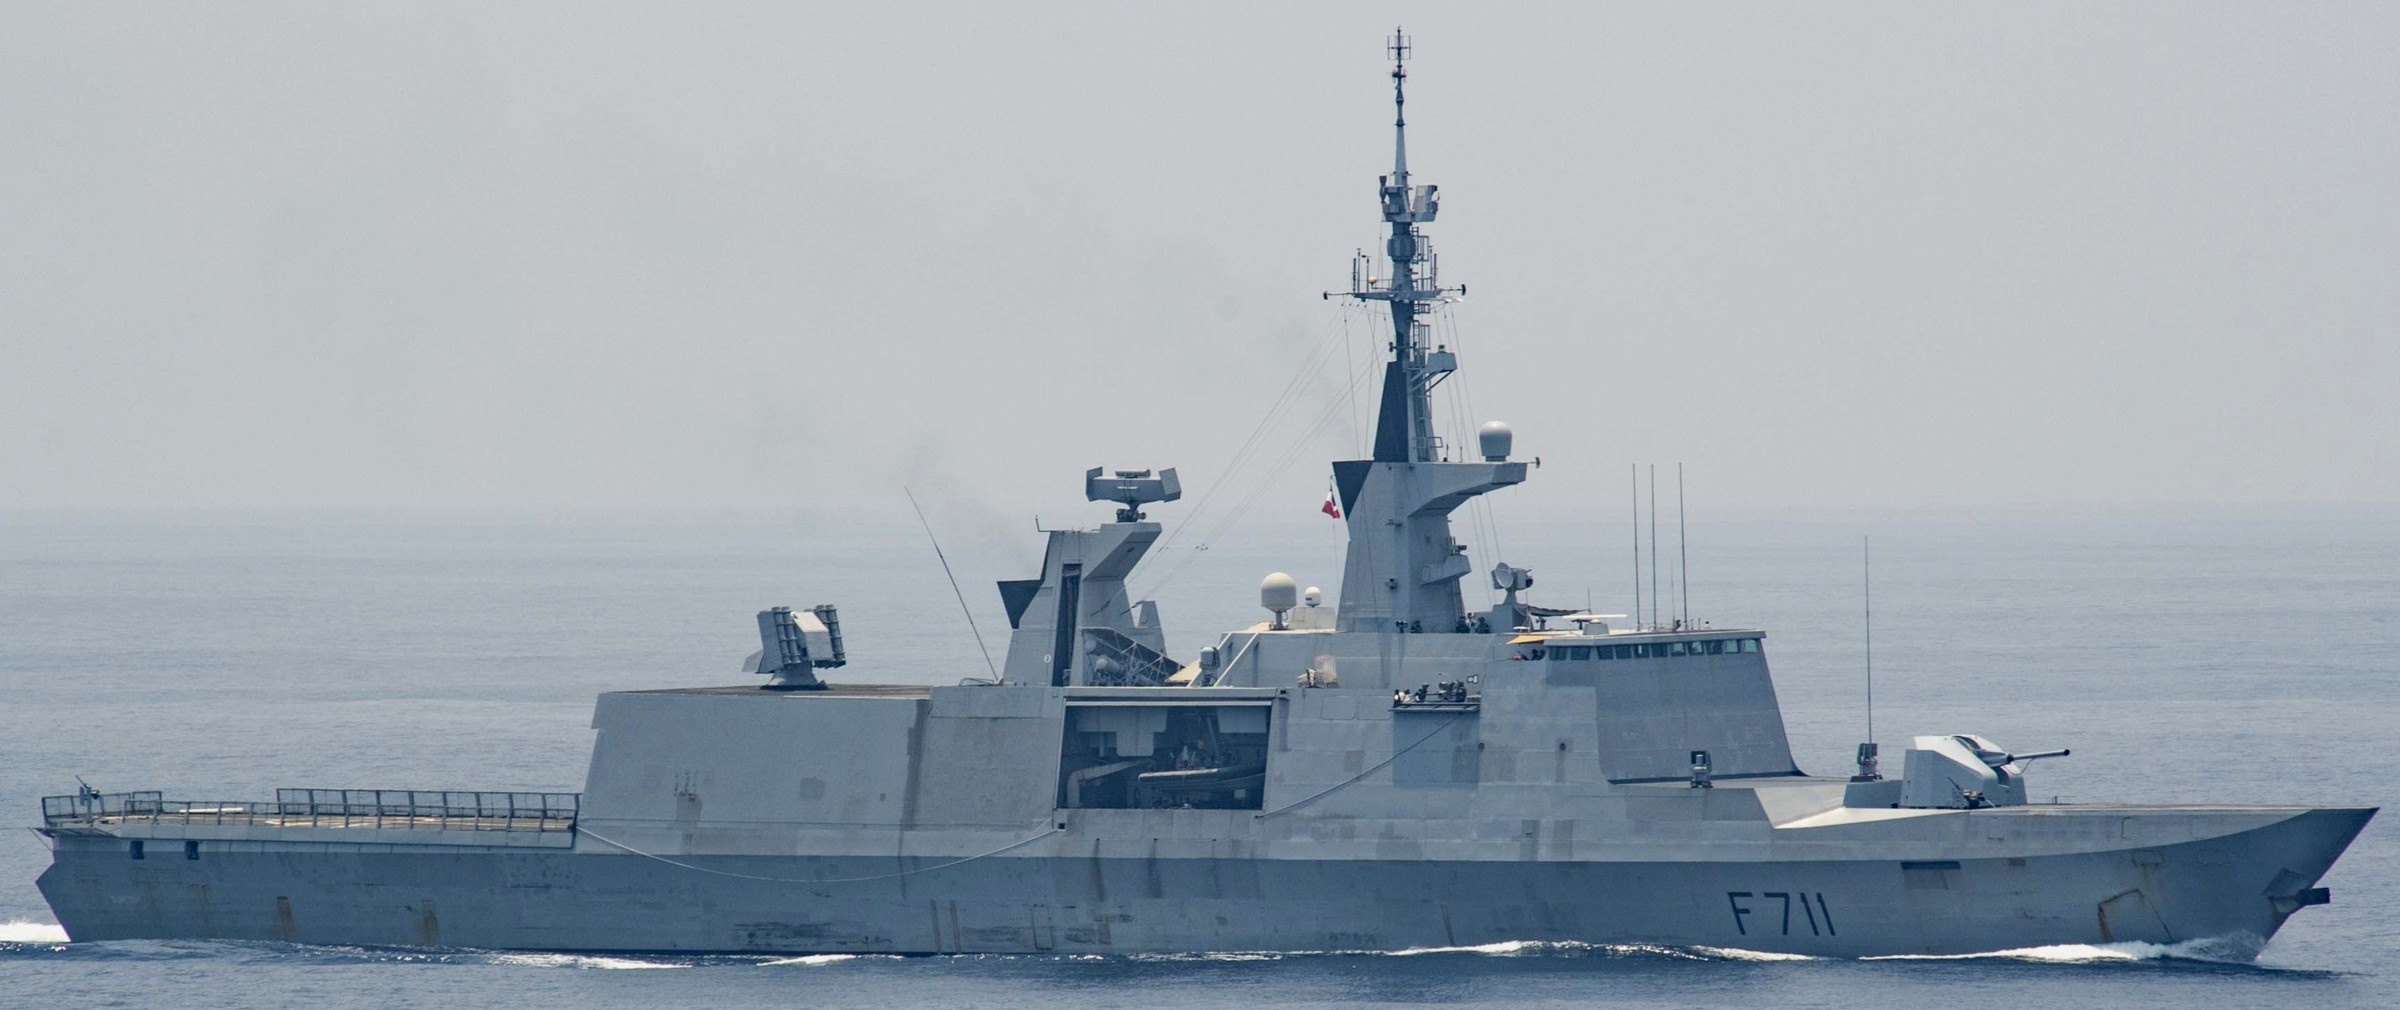 f-711 fs surcouf la fayette class frigate french navy marine nationale 38